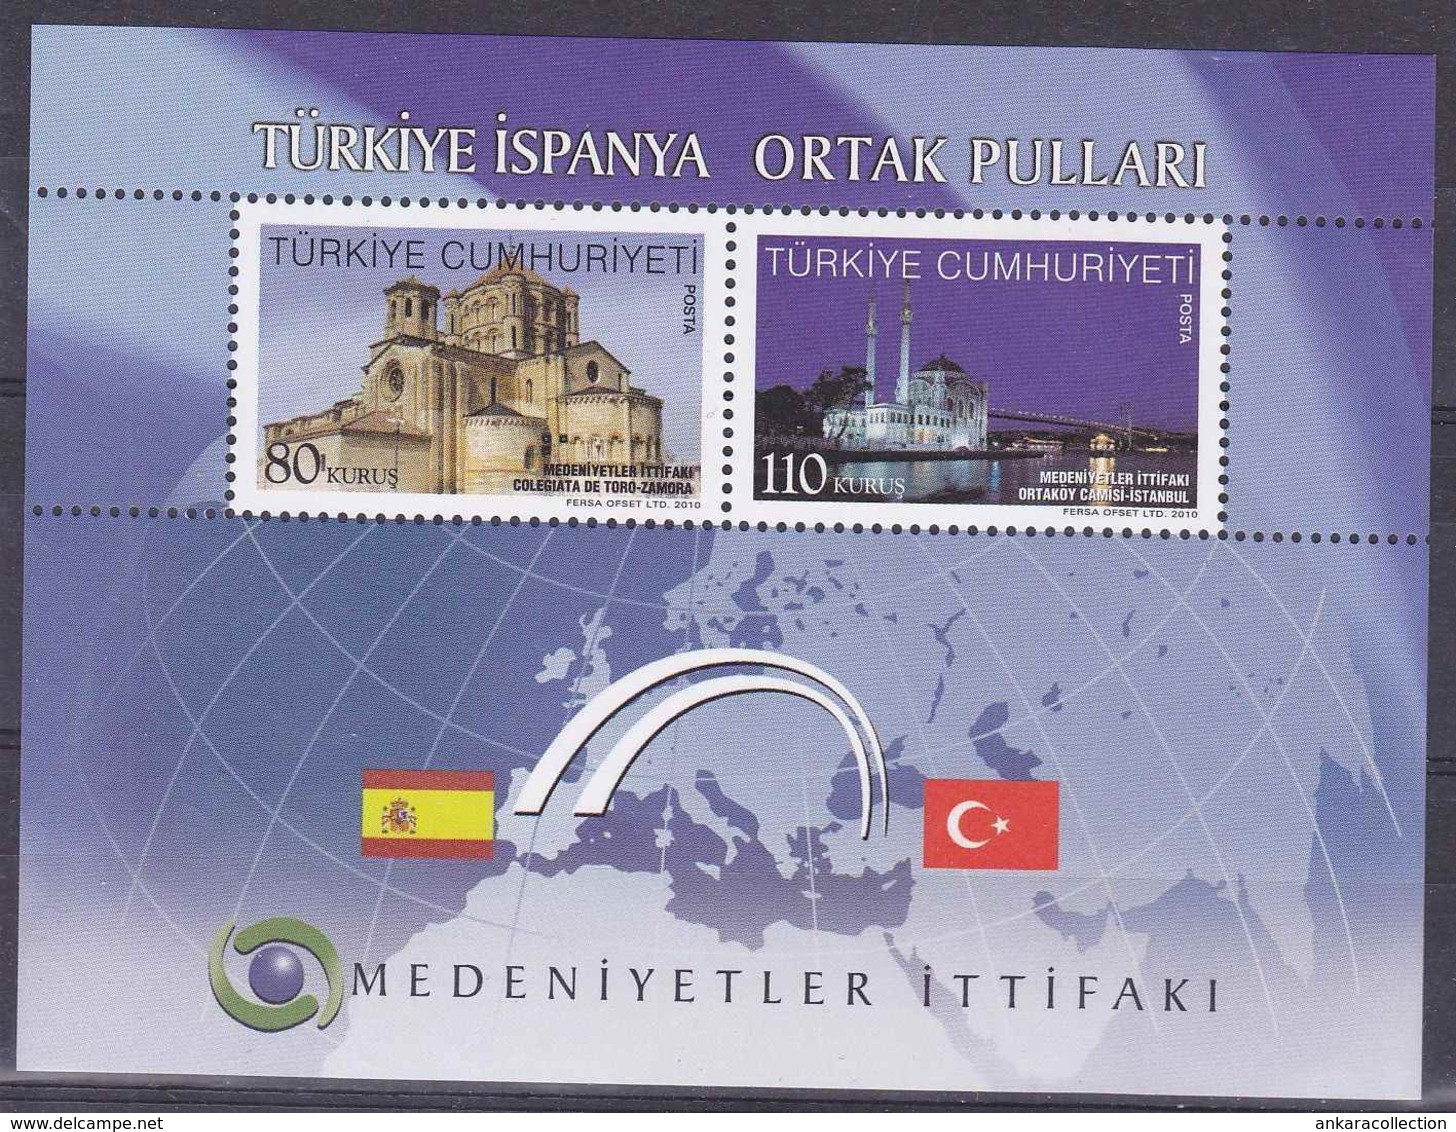 AC - TURKEY STAMP  -  THE ALLIANCE OF CIVILIZATION TURKEY - SPAIN SOUVENIR SHEET MNH  18 OCTOBER 2010 - Unused Stamps